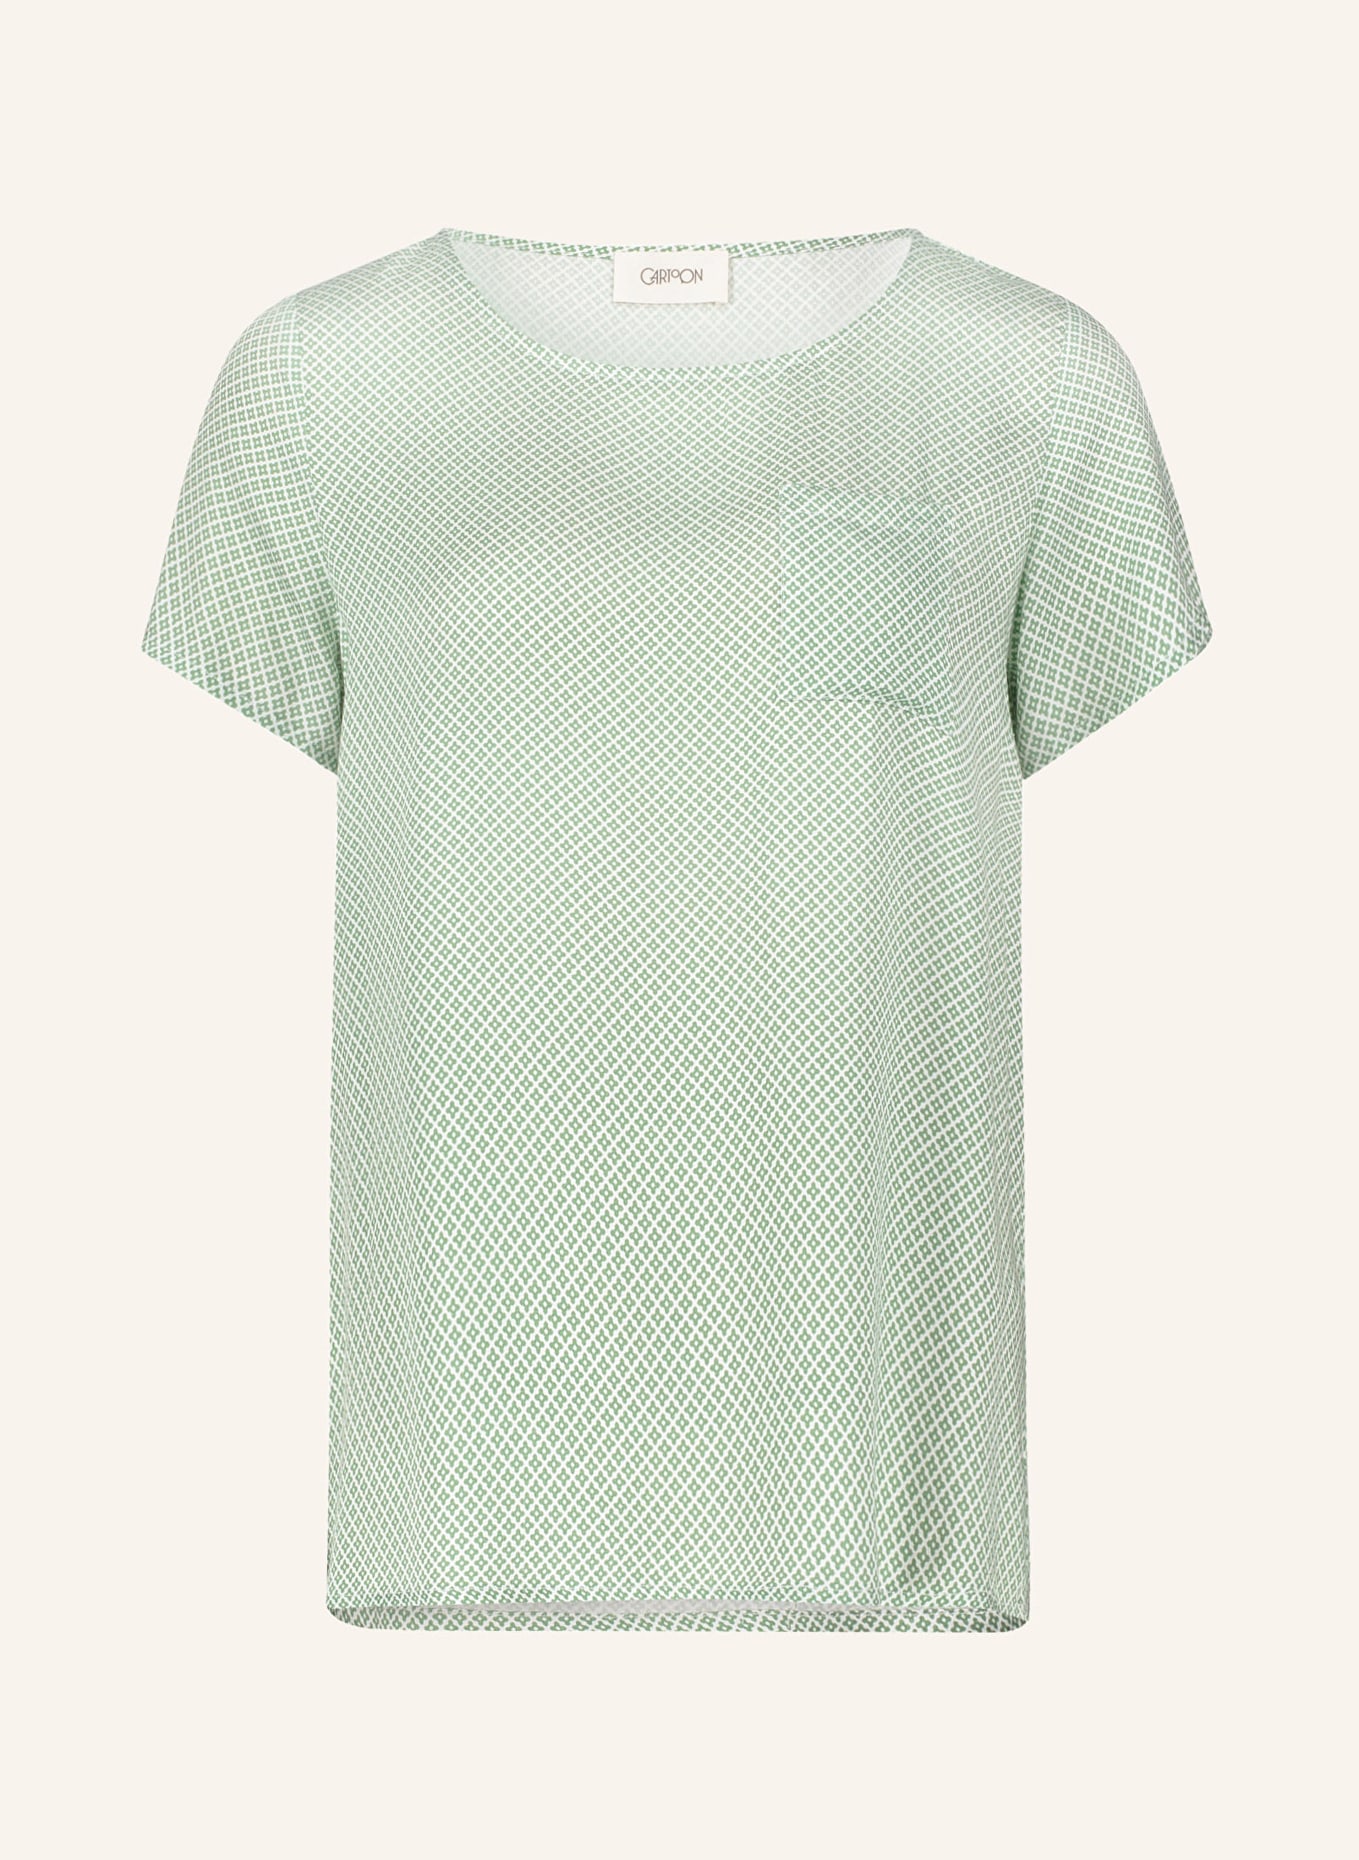 CARTOON Blusenshirt, Farbe: GRÜN/ CREME (Bild 1)